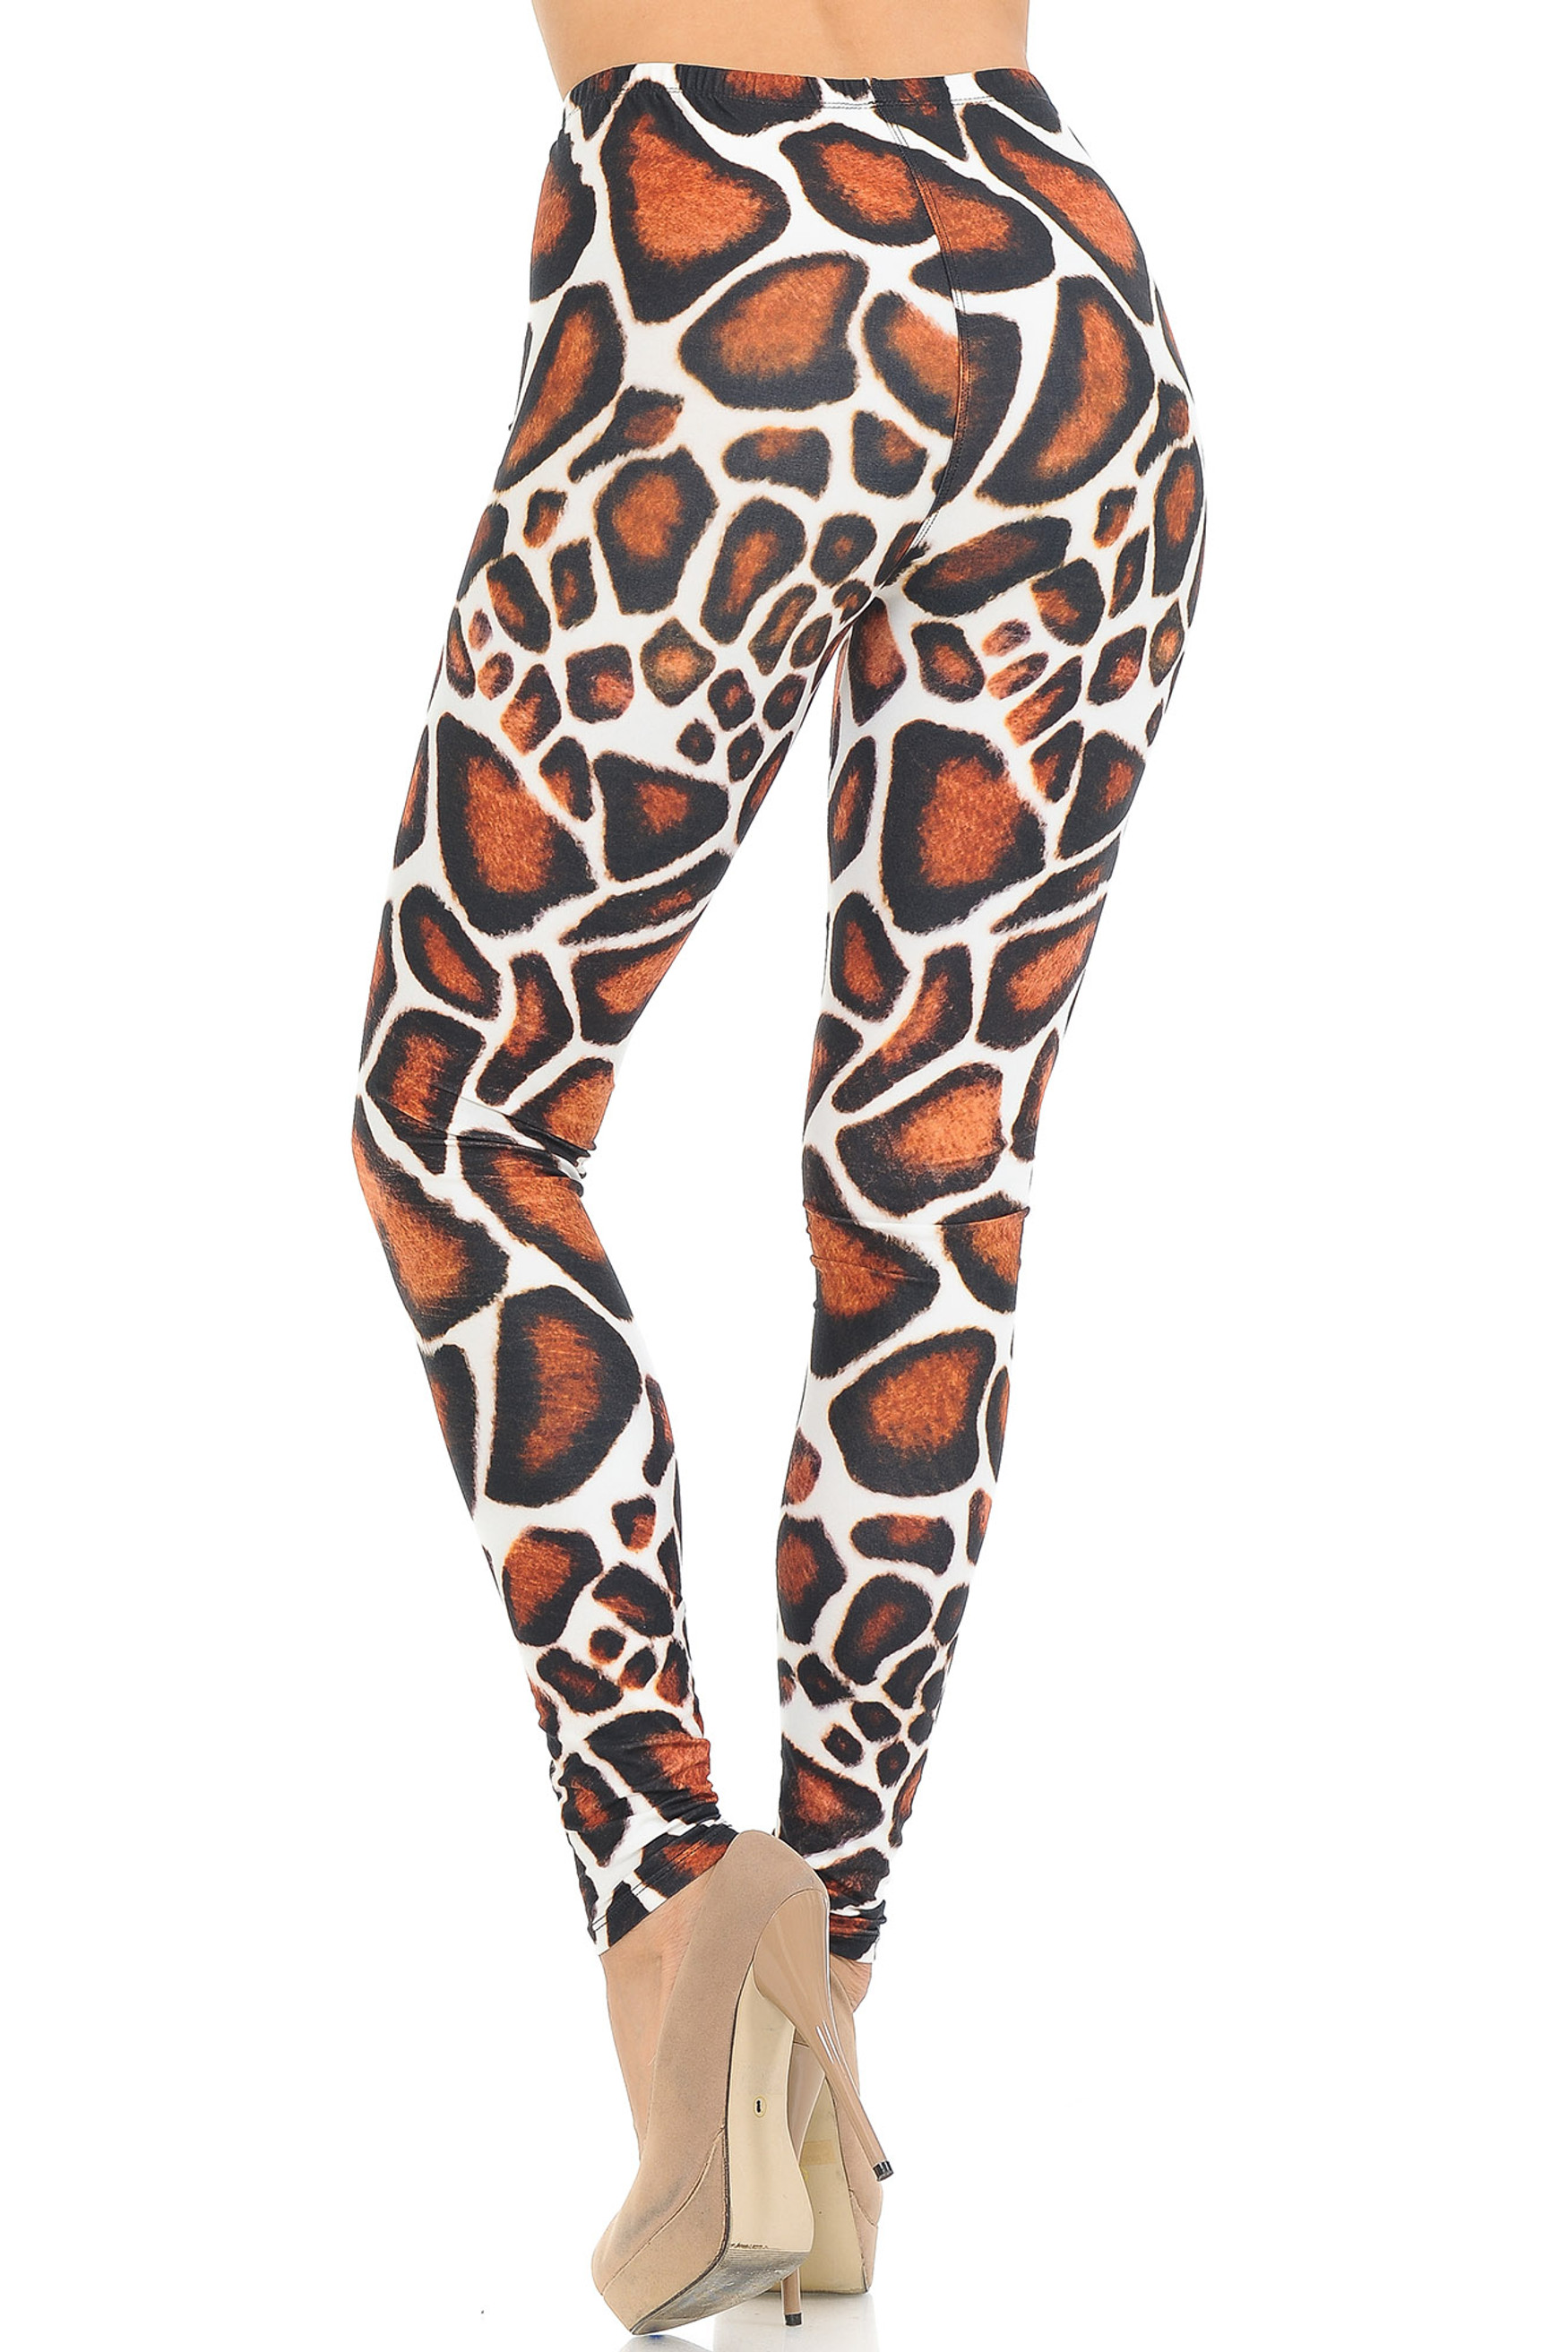 Creamy Soft Giraffe Print Extra Small Leggings - USA Fashion™